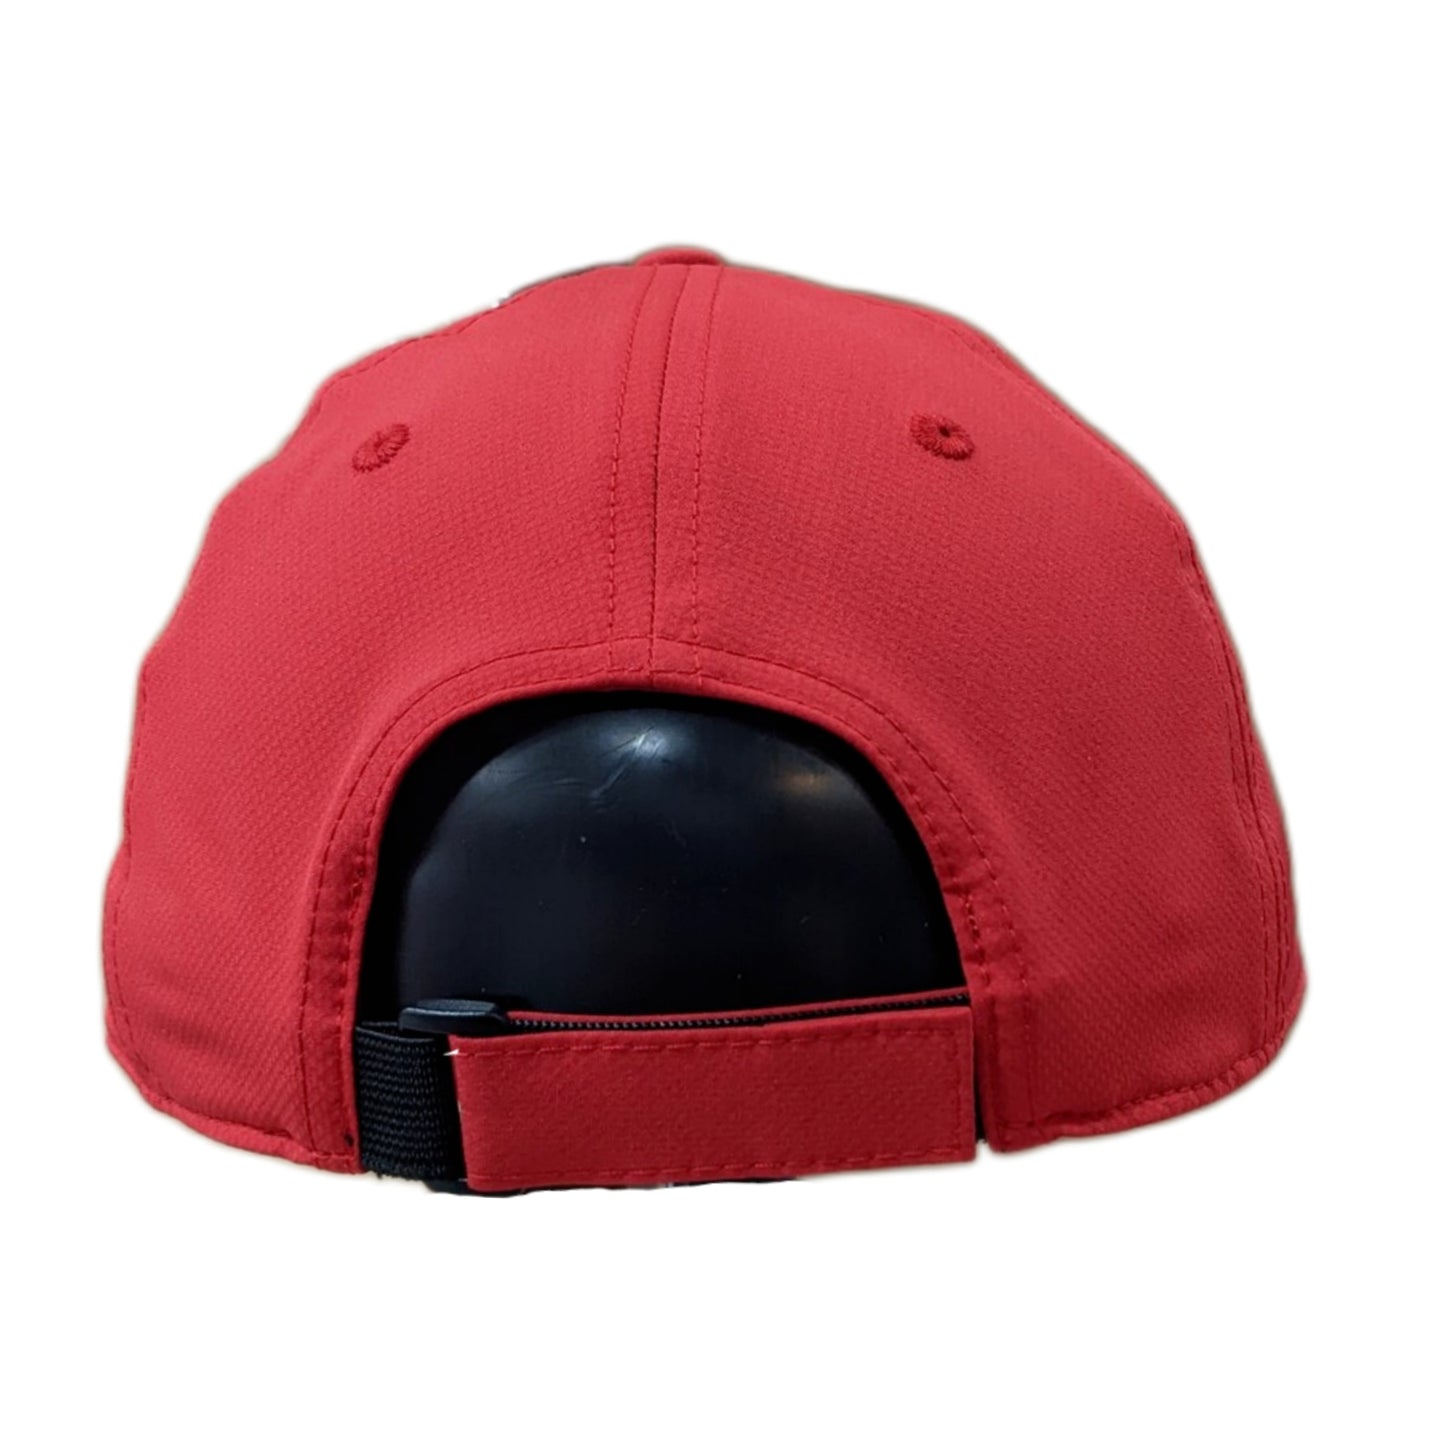 Men's Wisconsin Badgers Top of the World Red Performance Adjustable Hat